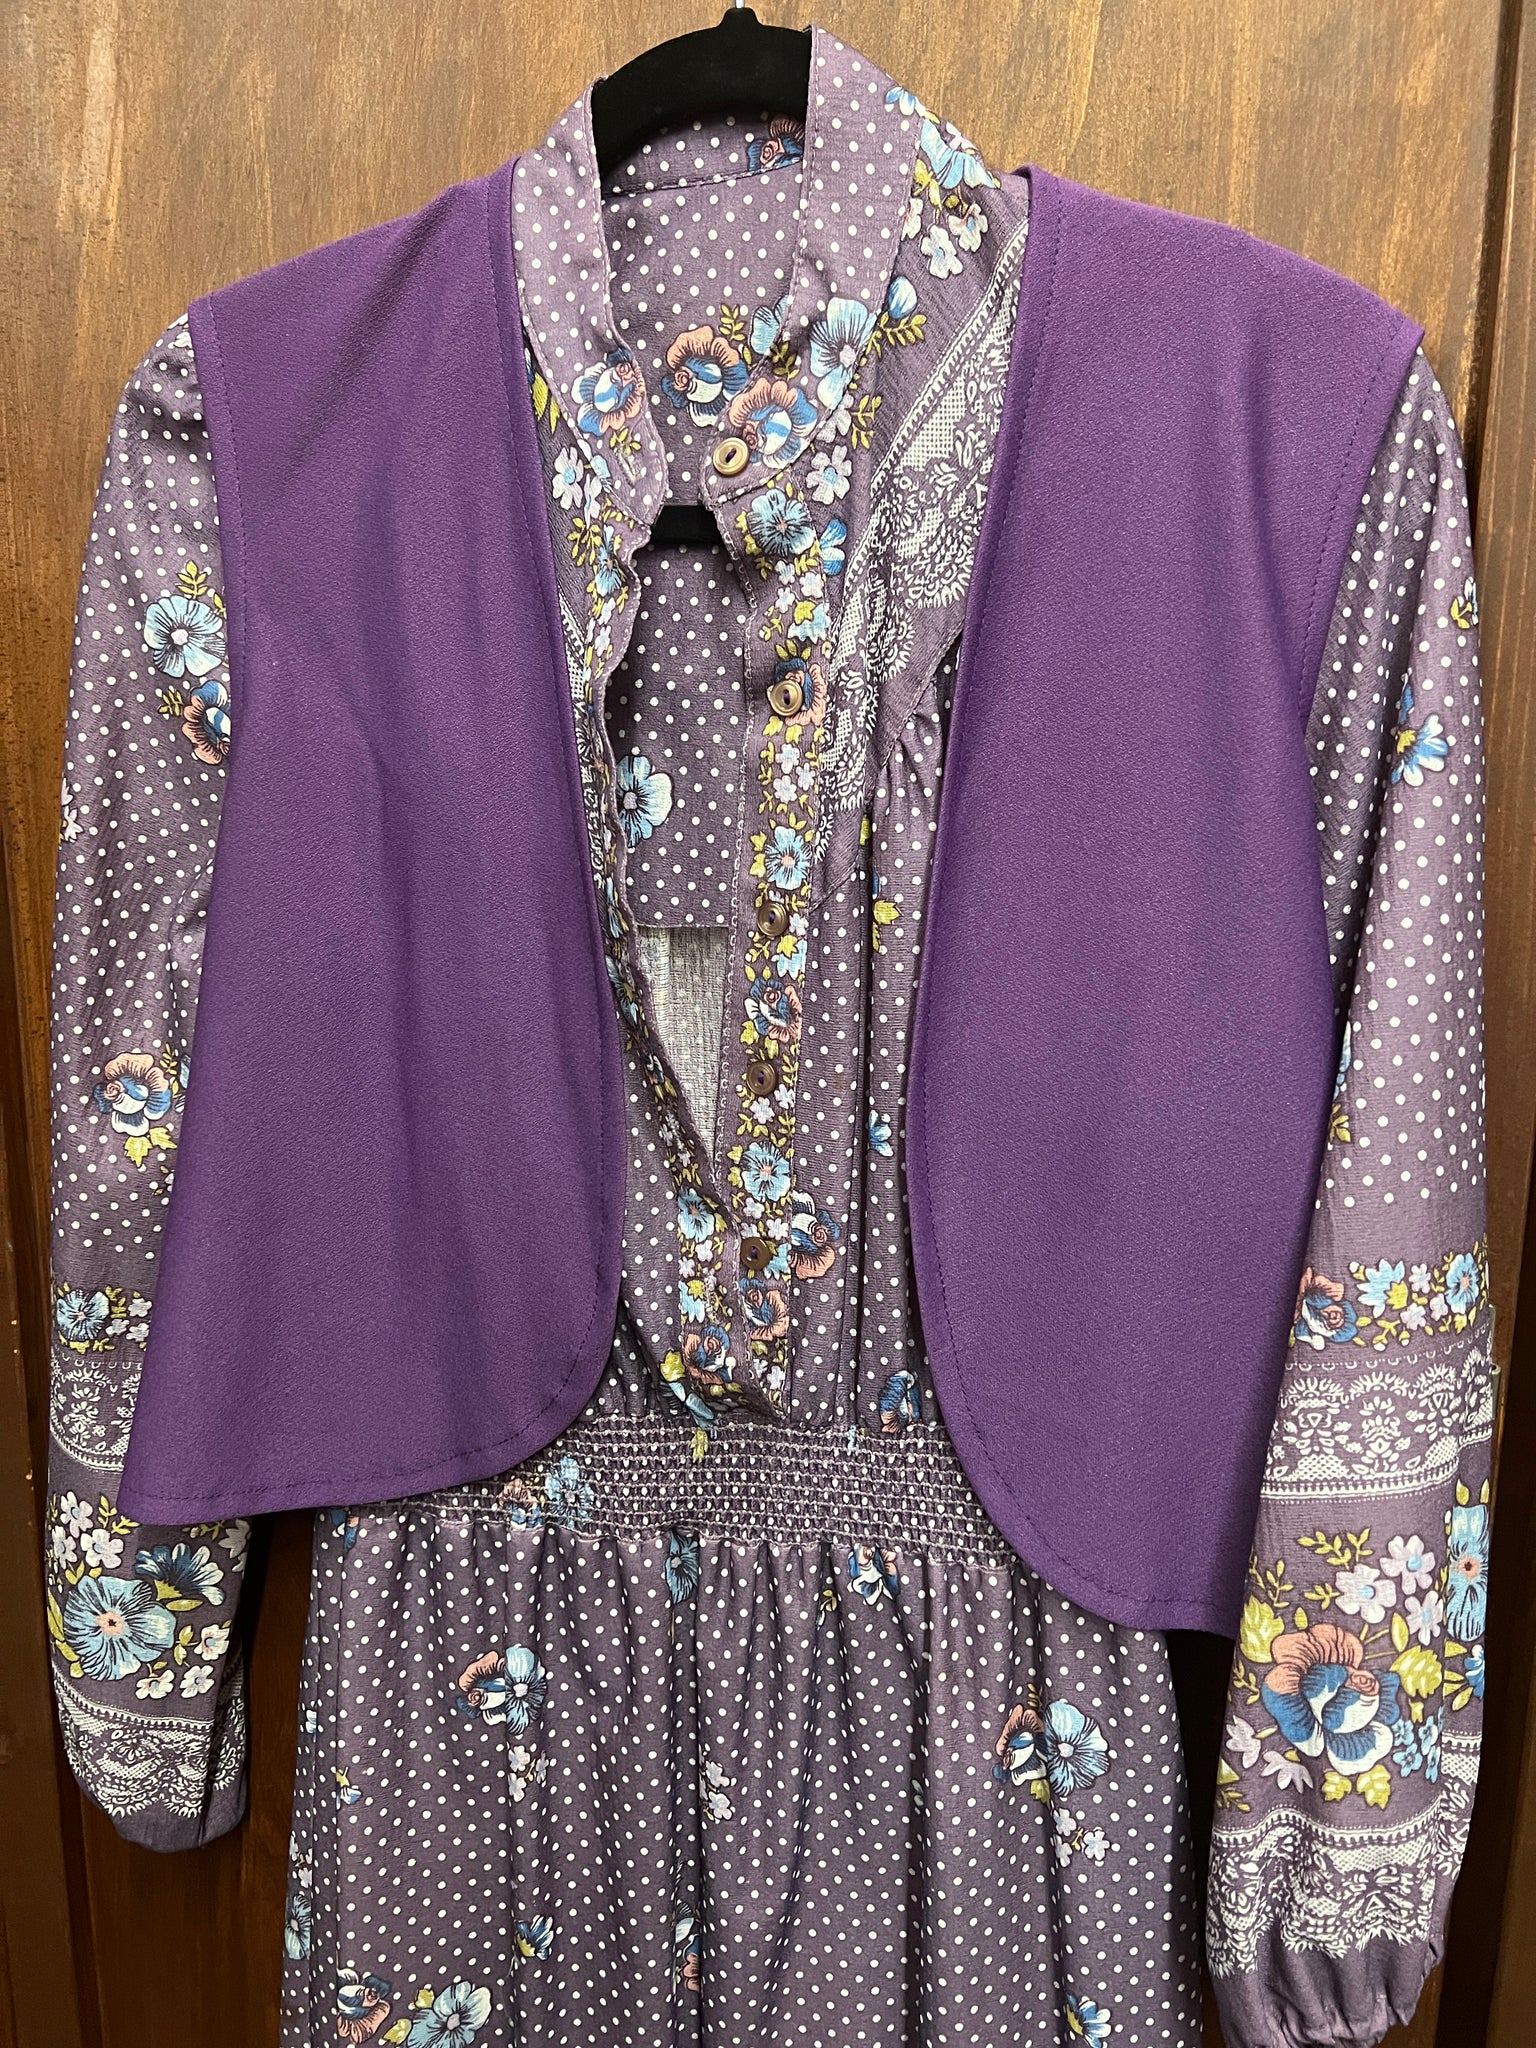 1970s -DRESS- lavender floral & polka dot print w/ purple vest